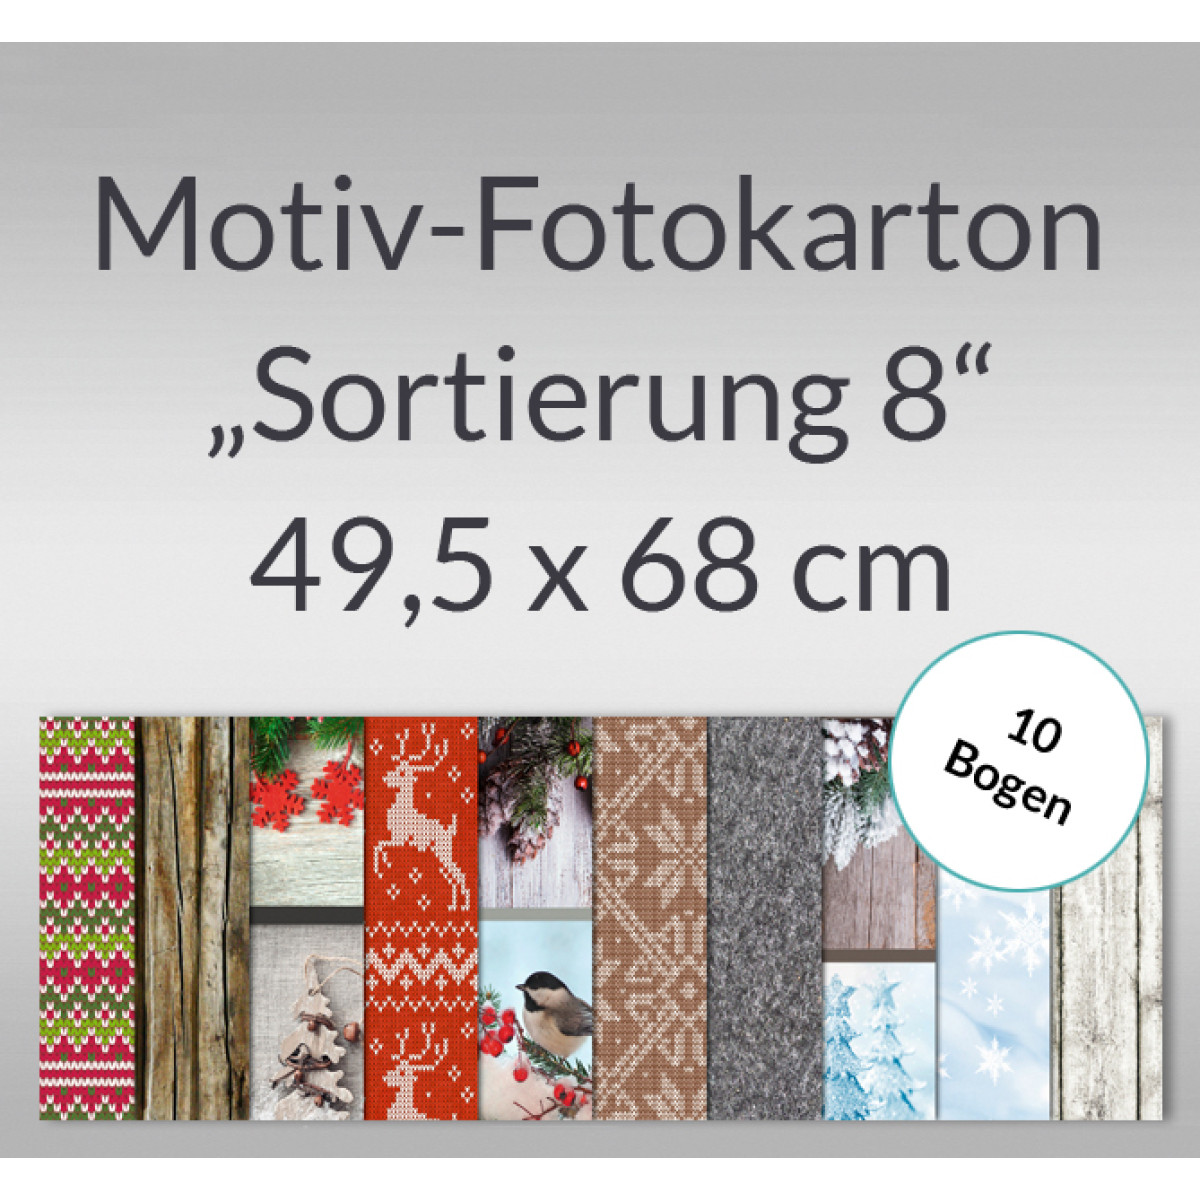 Motiv-Fotokarton "Sortierung 8" 49,5 x 68 cm - 10 Bogen